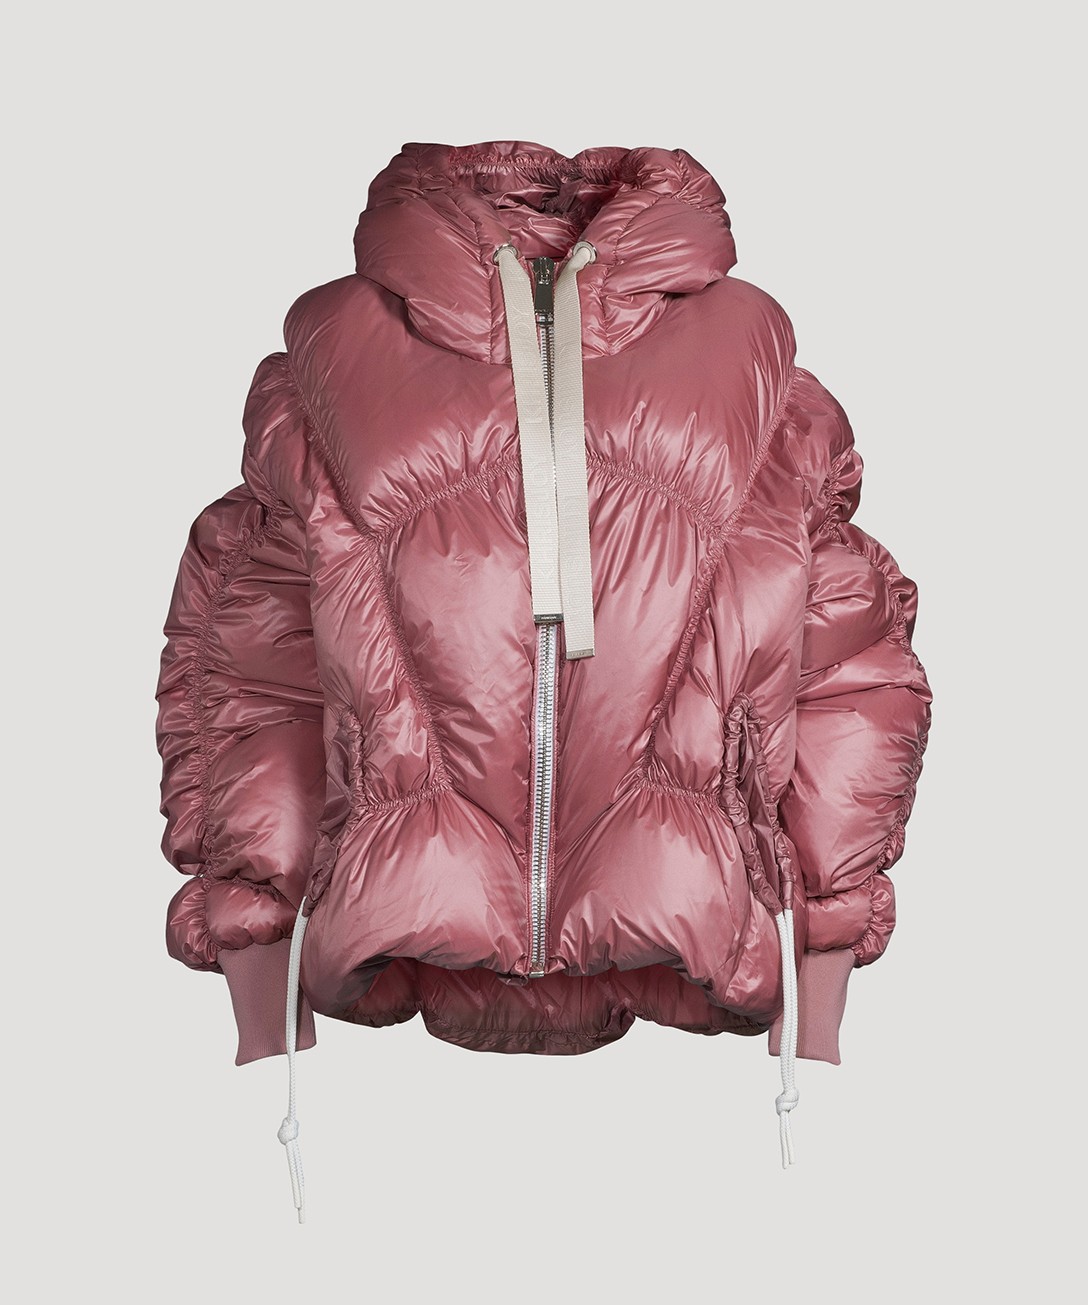 Image of a KHRISJOY Puff Khris Cloud Down Jacket in pink.